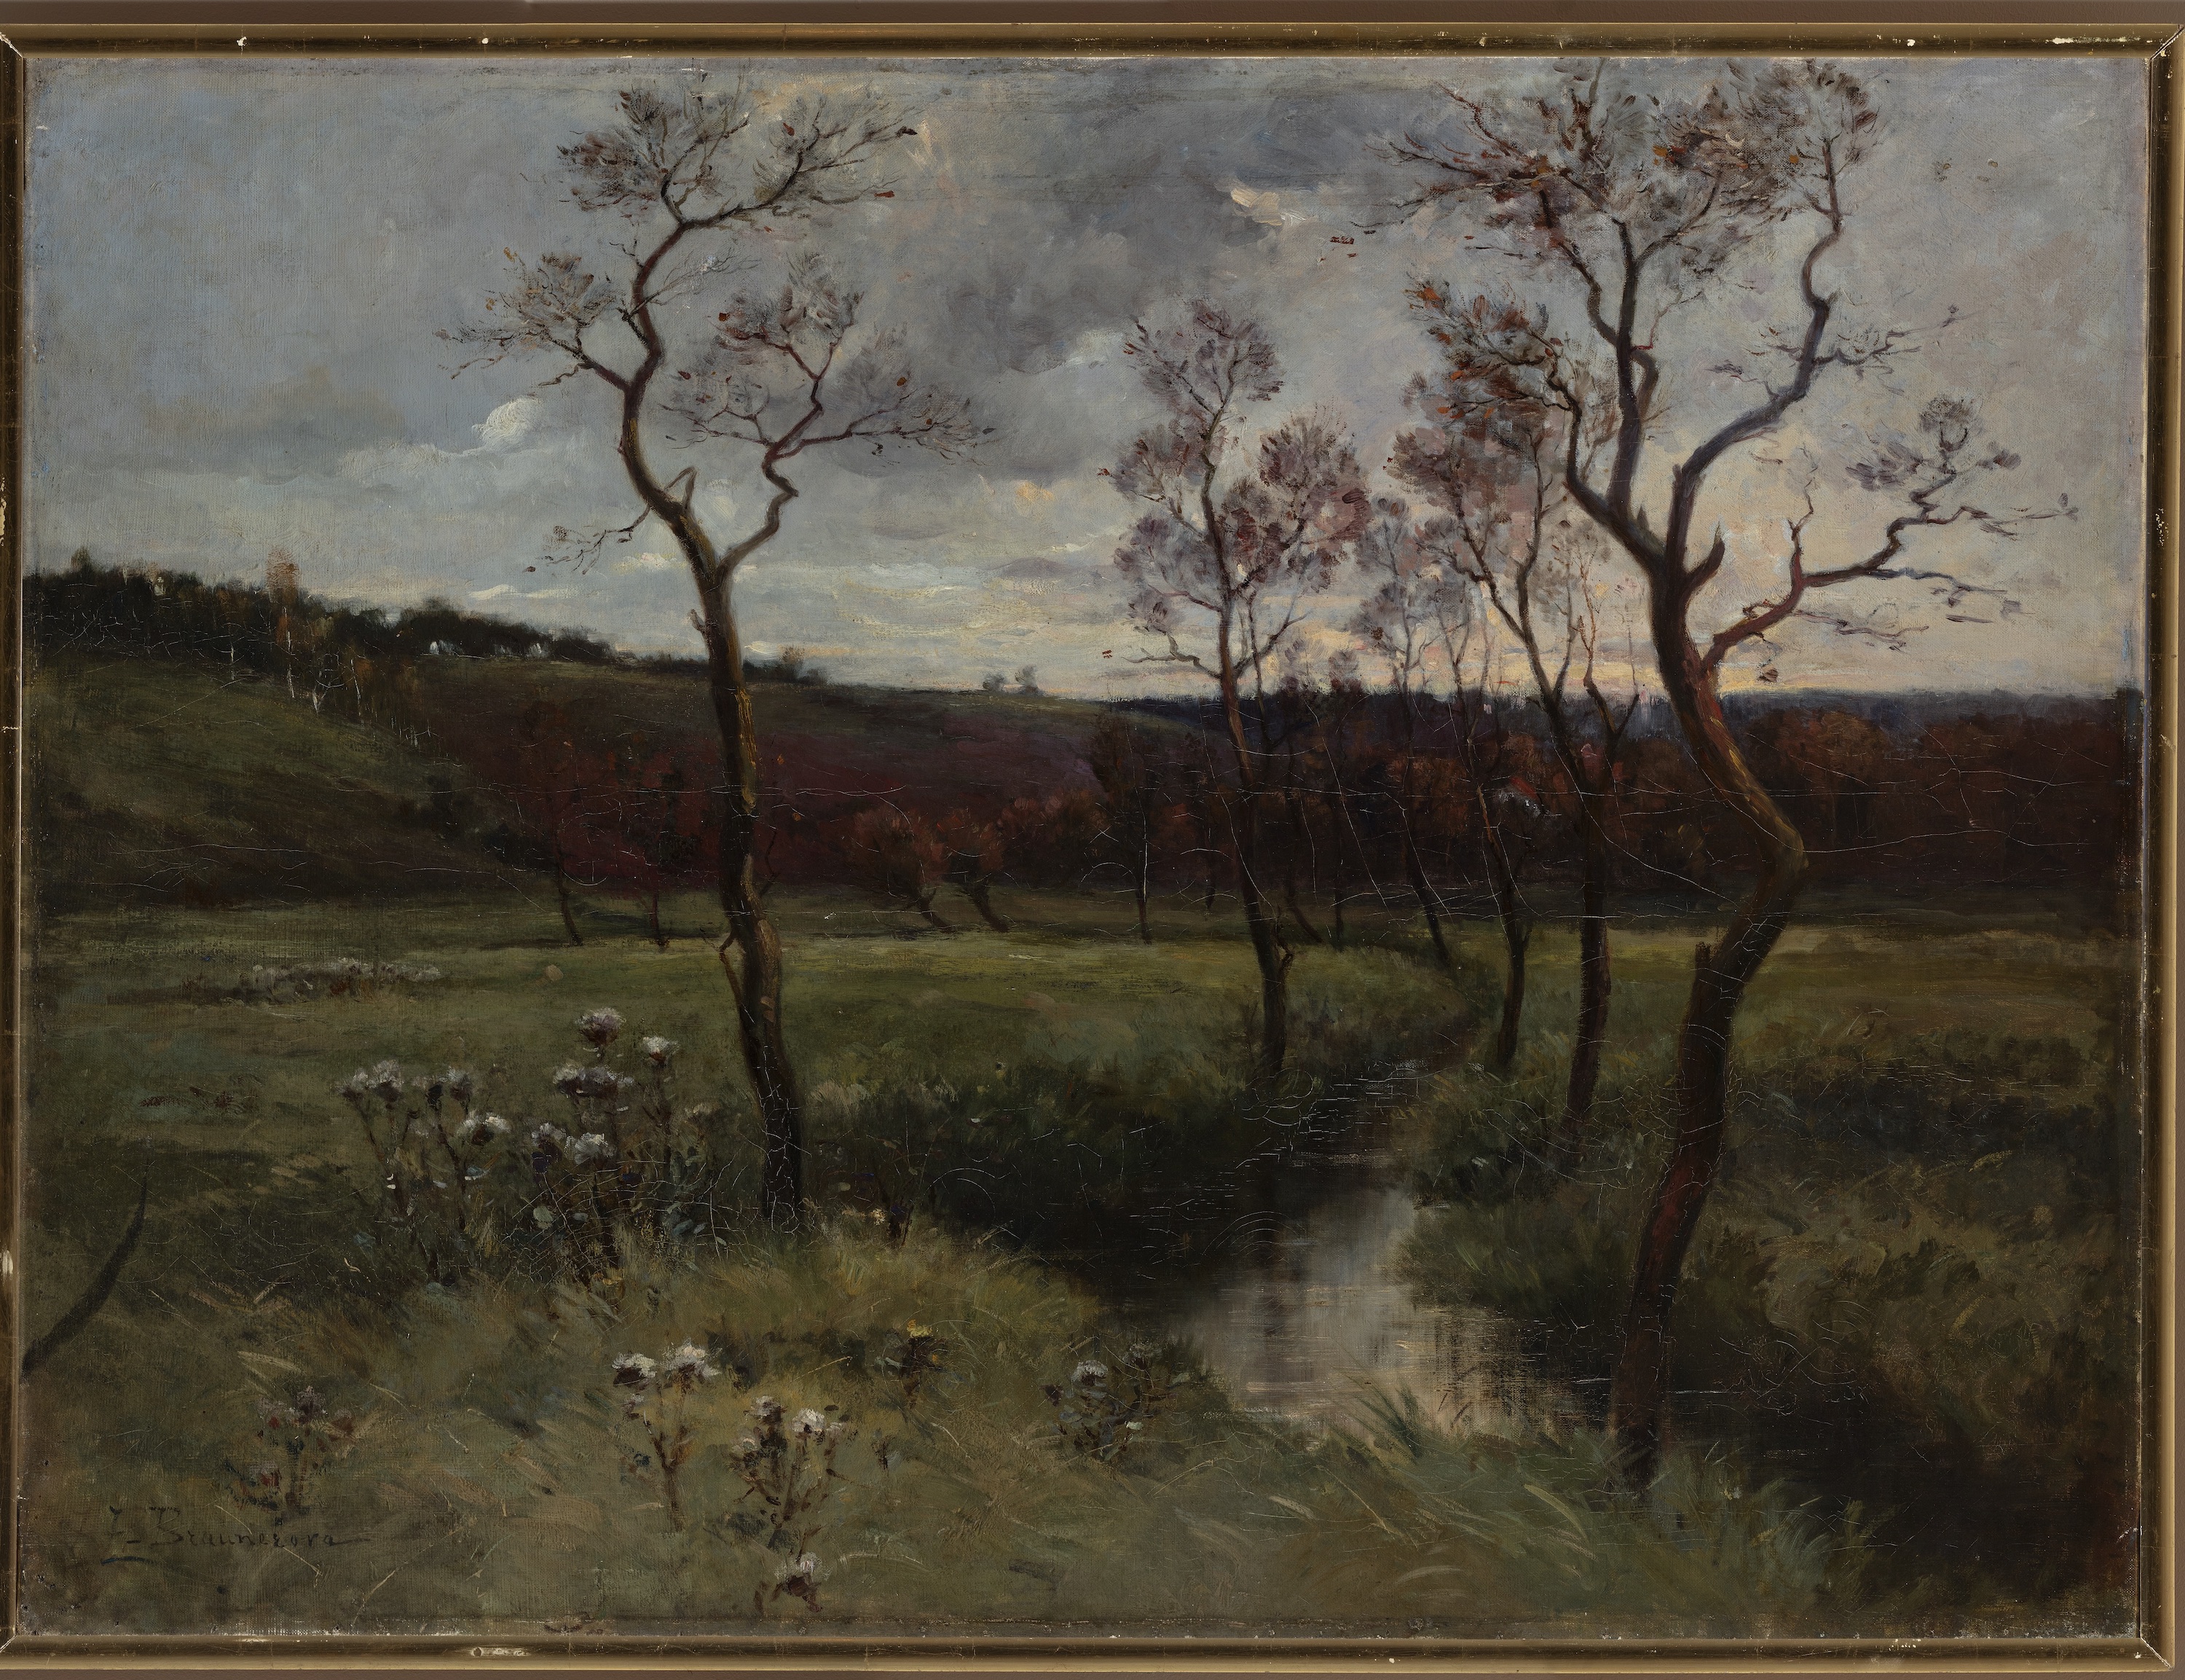 Roztoky'de Sessiz Bir Vadi (orig. "A Quiet Valley at Roztoky") by Zdenka Braunerová - 1886 civarı - 83 x 110 cm 